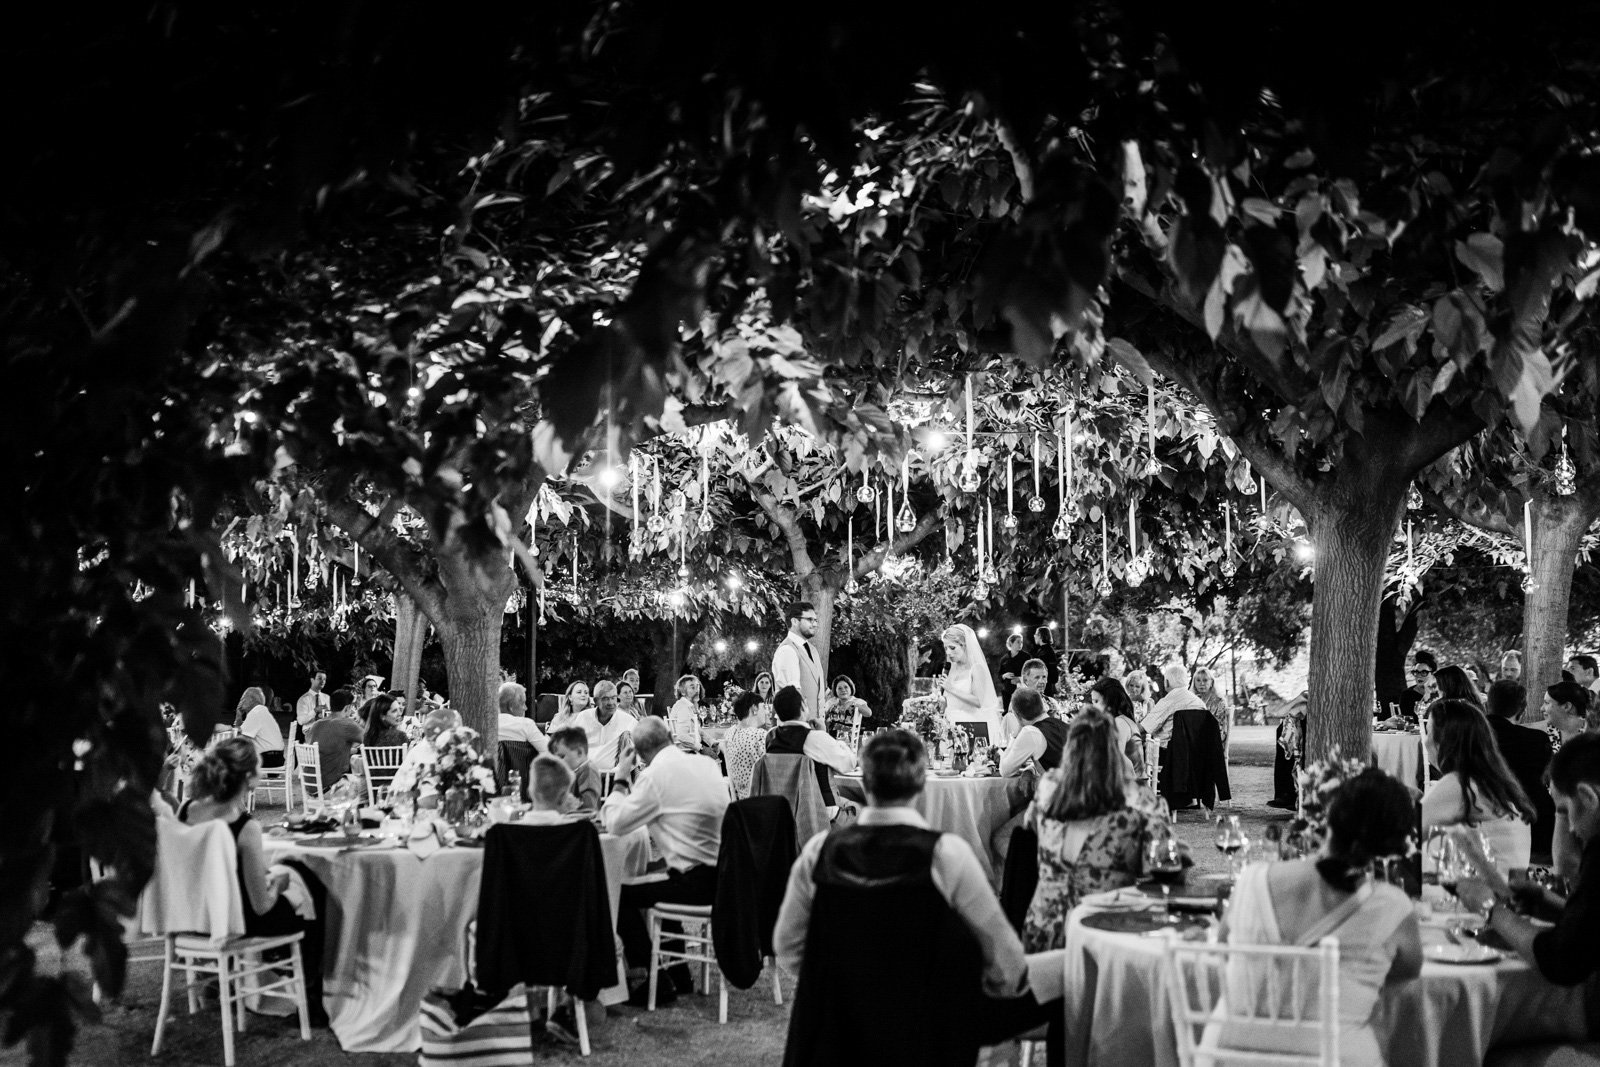 wedding dinner in spain - 2022 wedding round up no nonsense heartfelt wedding photography leeallenphotos